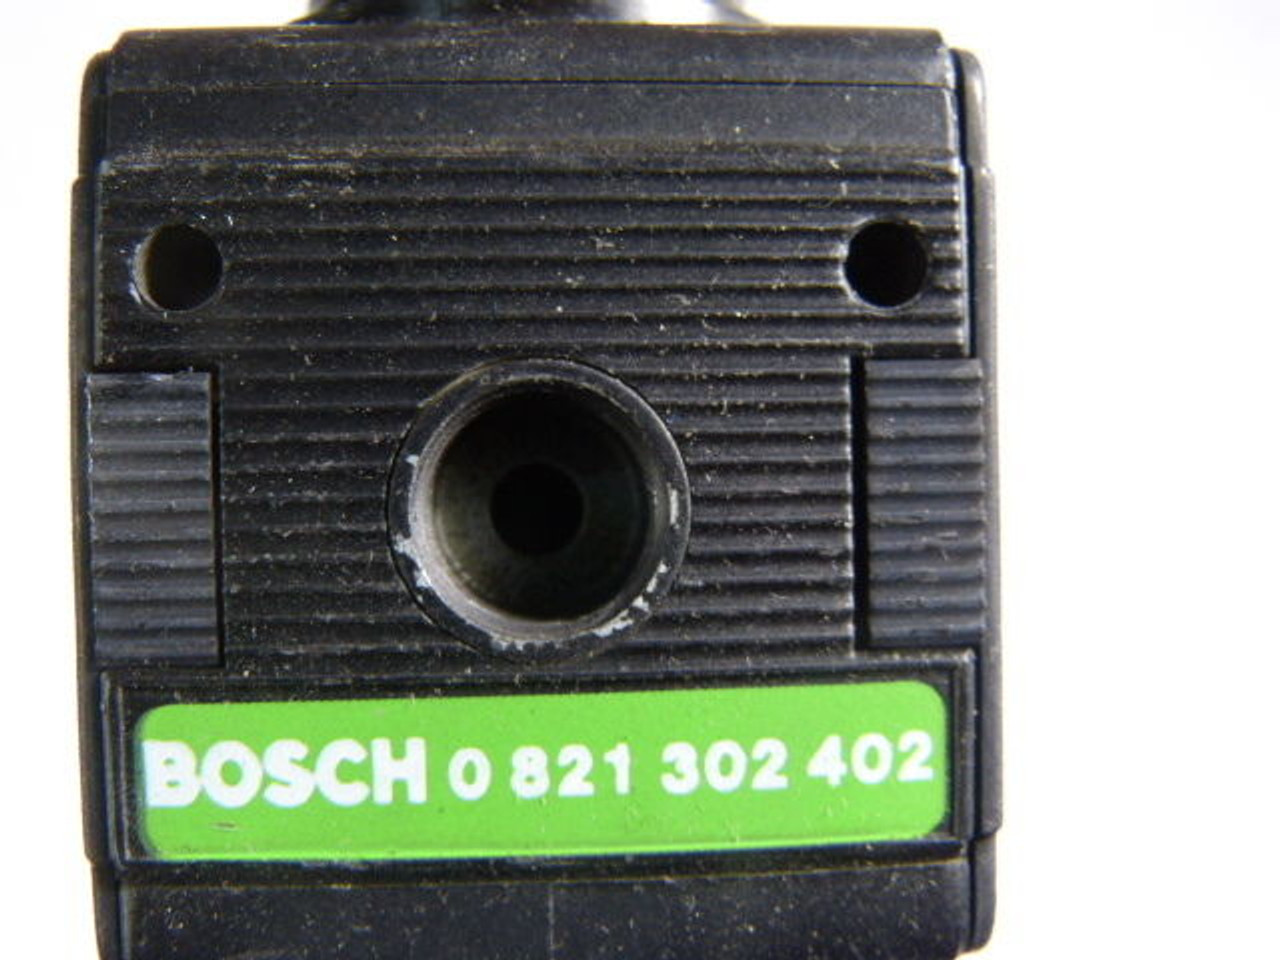 Bosch 0-821-302-402 Pneumatic Valve NL2RGS-G014-GAU-MAN-100-SS USED